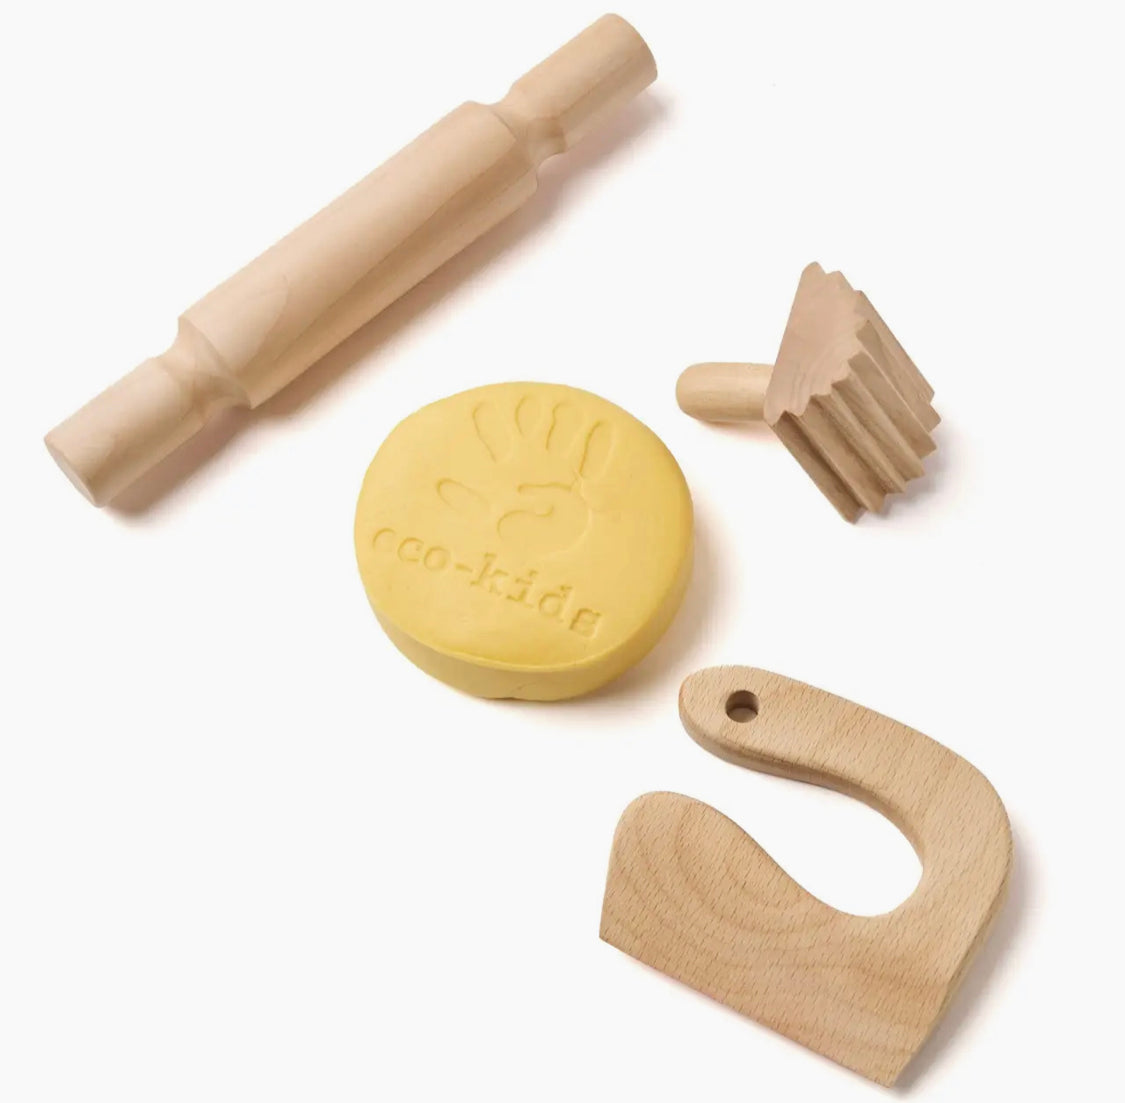 Wooden Play Dough Tools